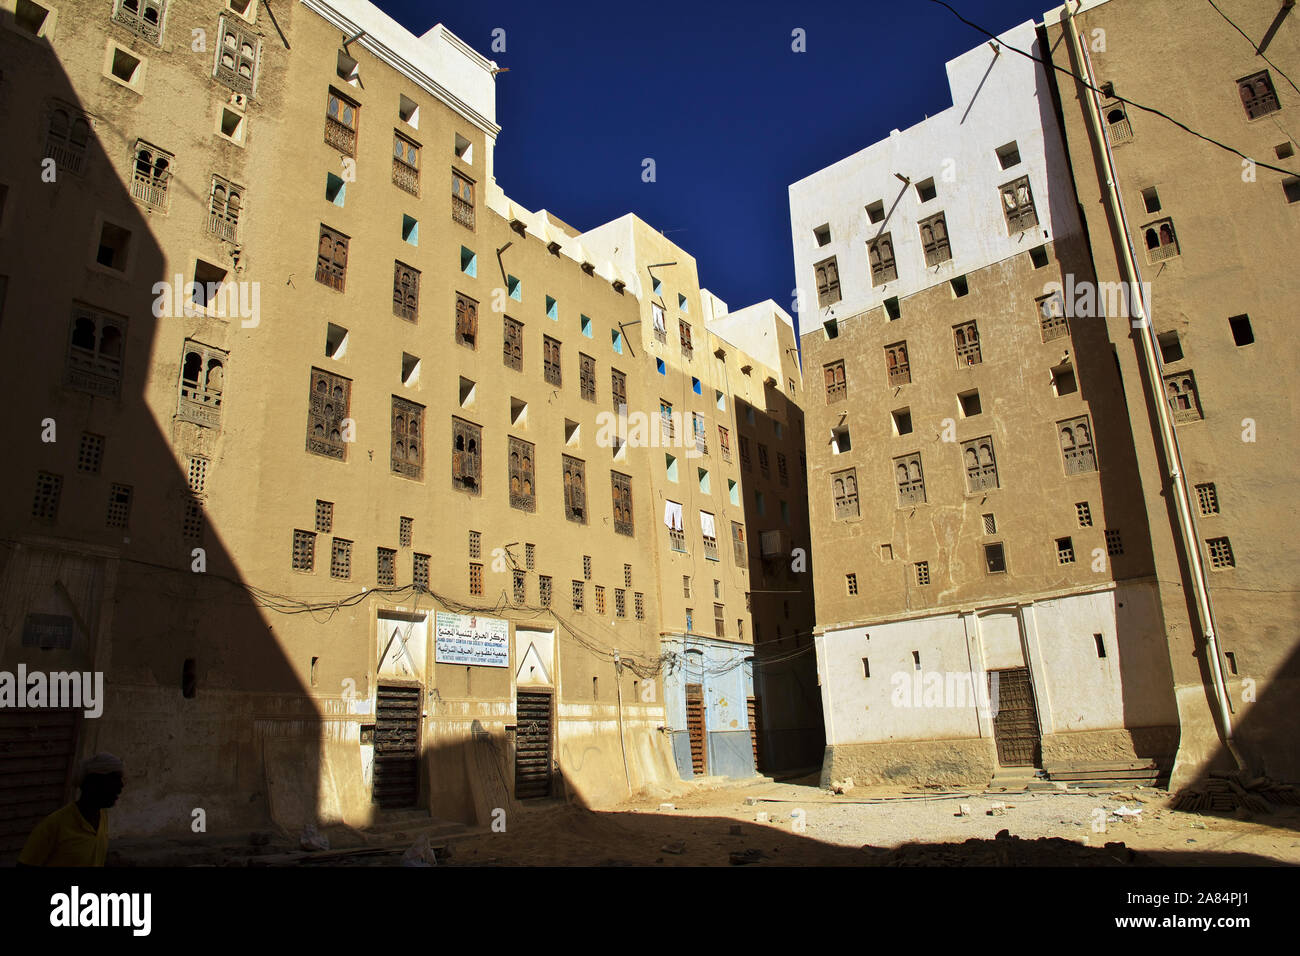 The city of medieval skyscrapers, Shibam, Wadi Hadramaut, Yemen Stock Photo